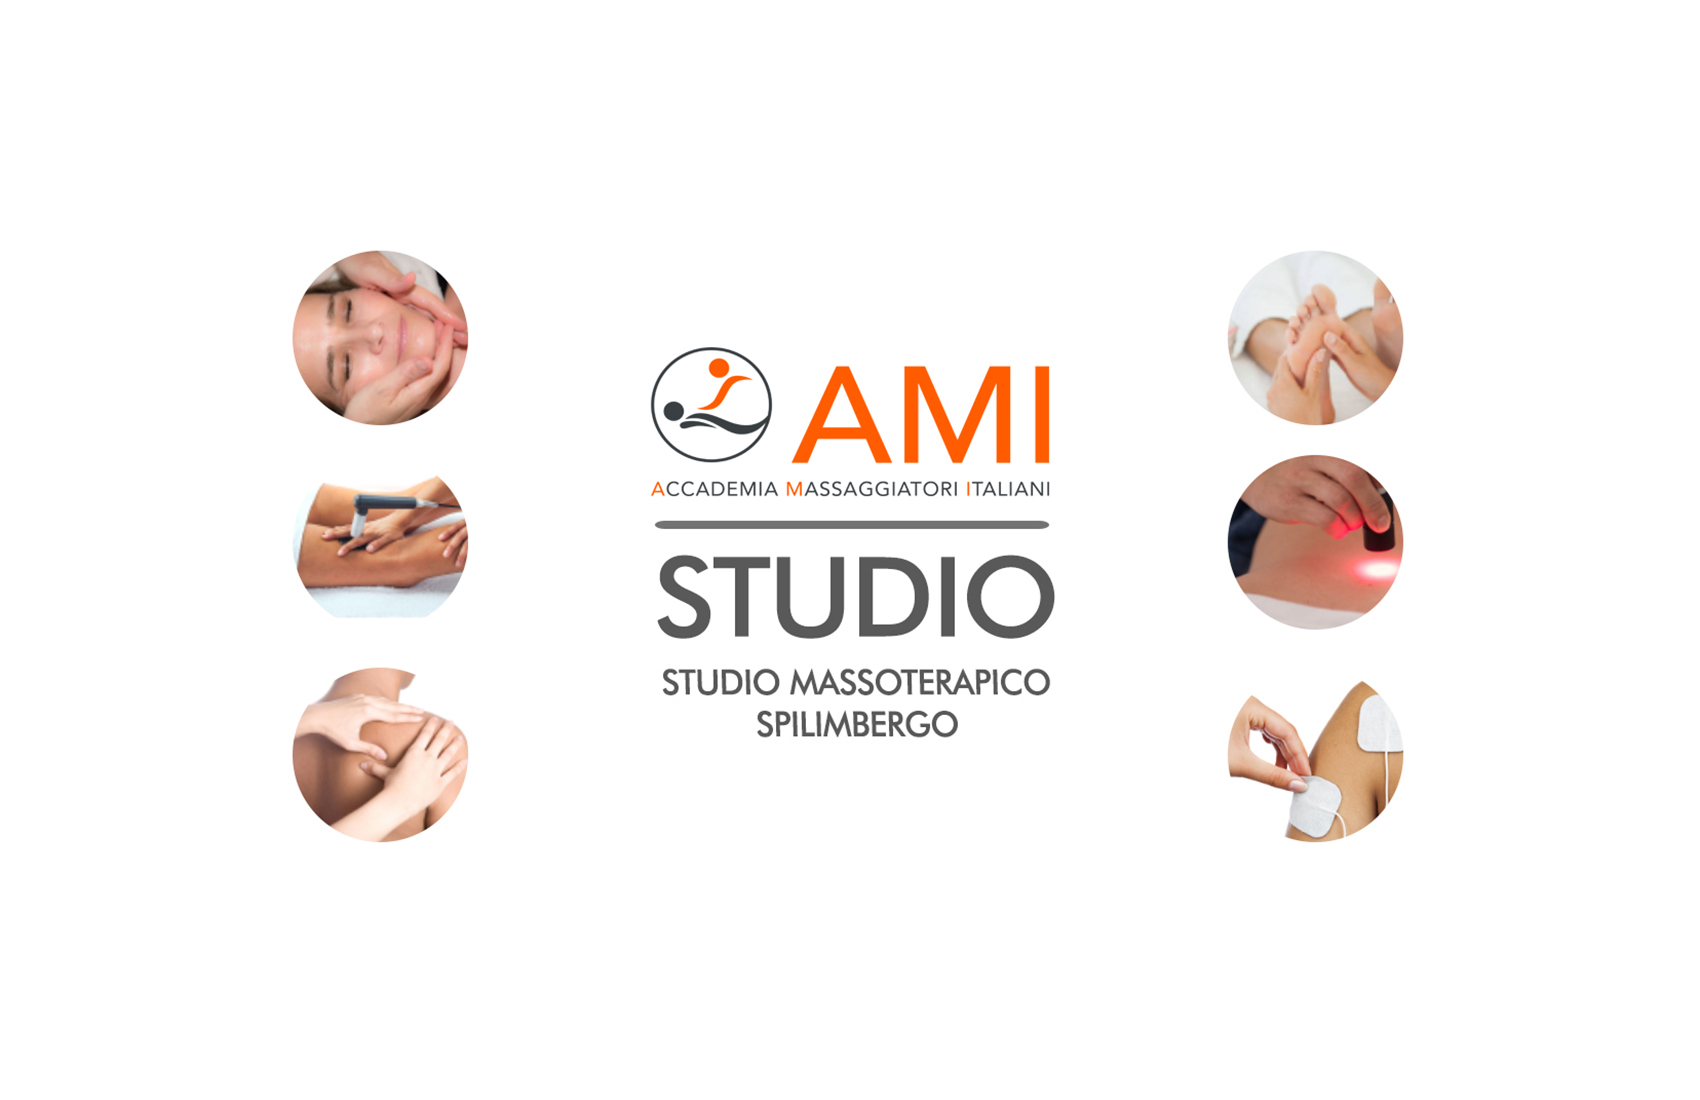 AMI Studio Spilimbergo - Spilimbergo